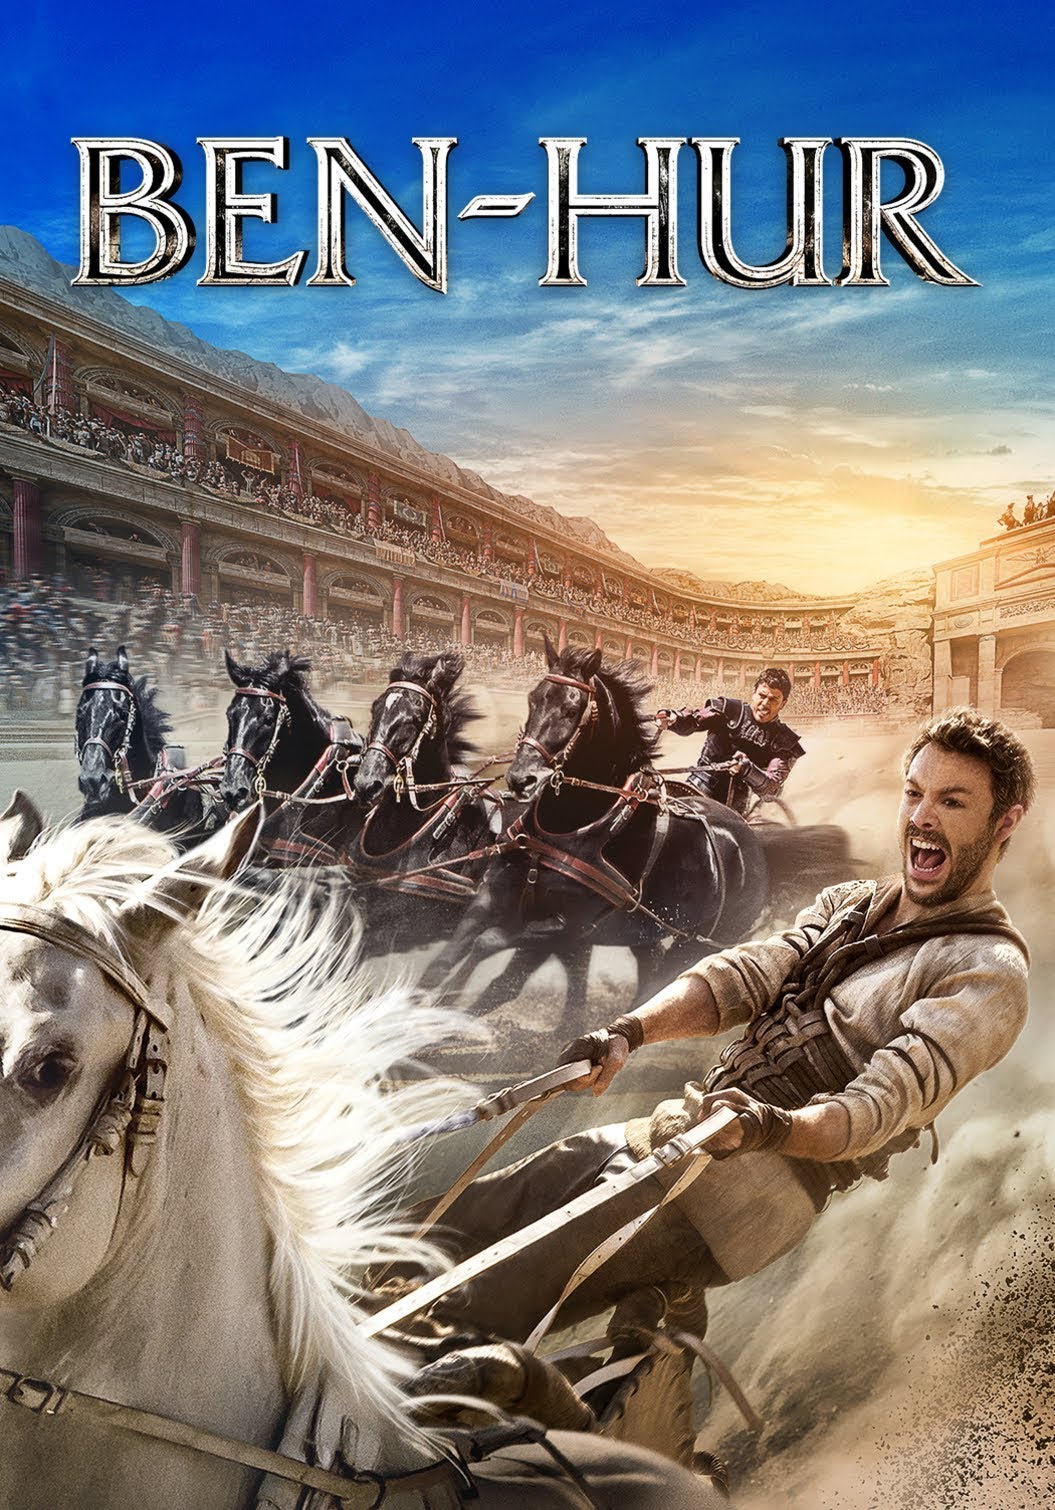 Ben-Hur [HD] (2016)